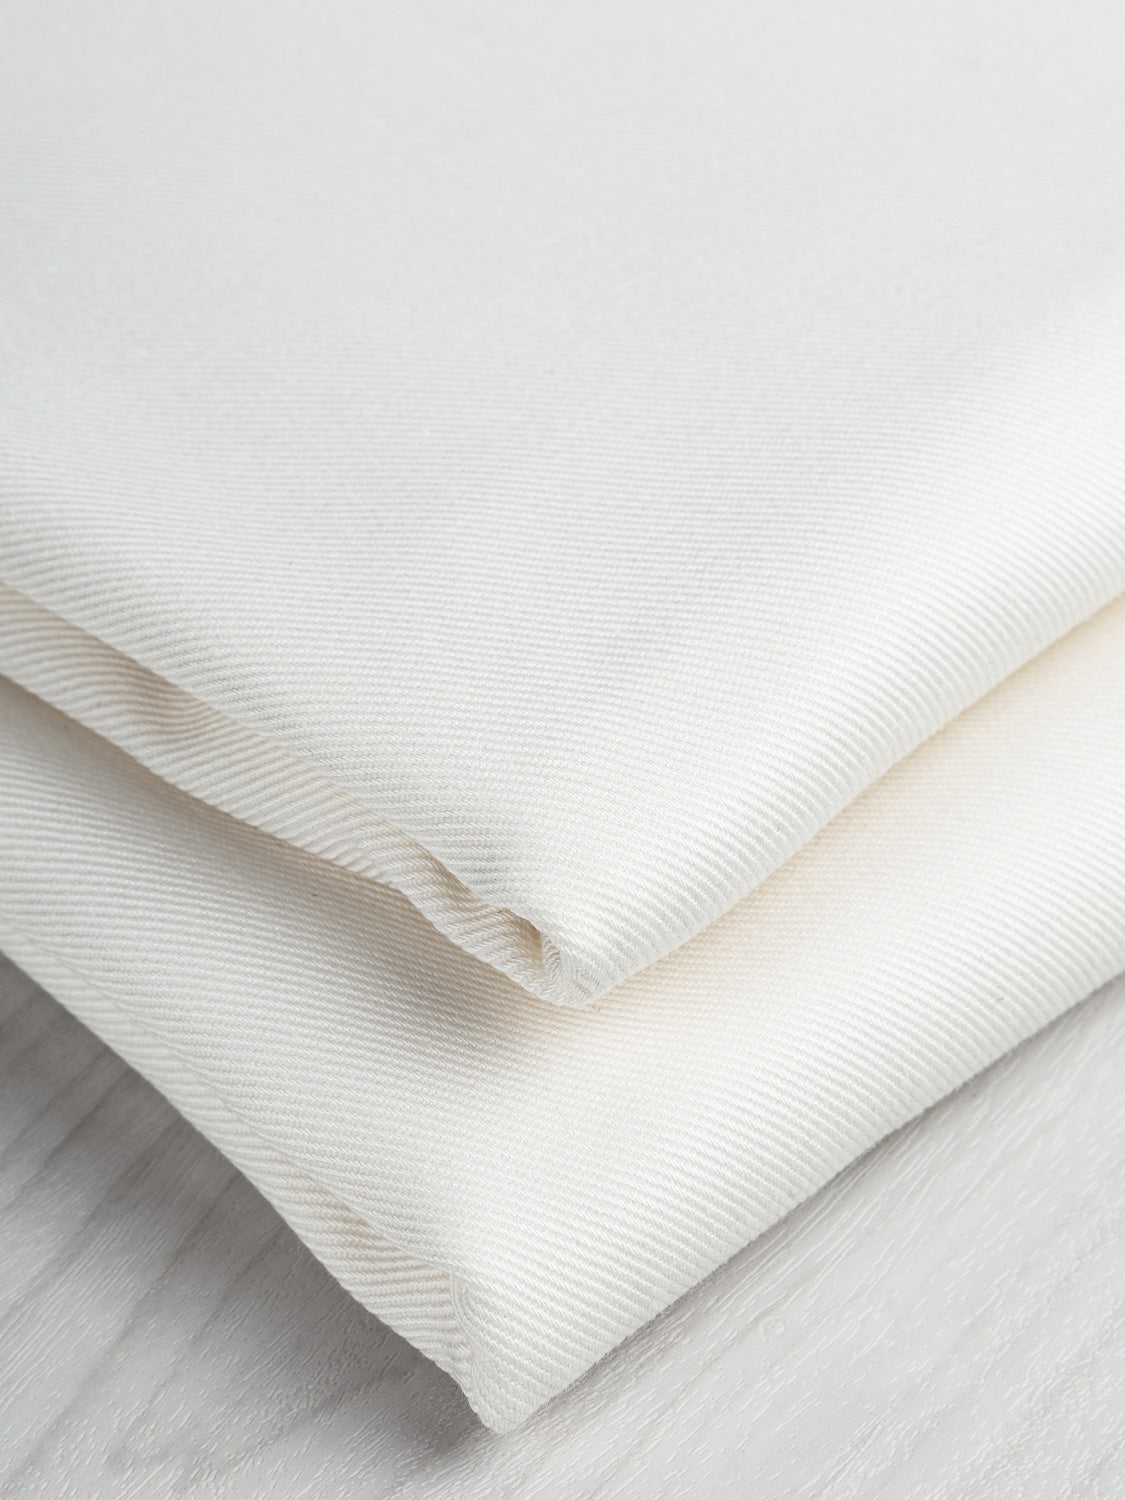 12.25 oz Organic Cotton Stretch Denim - White | Core Fabrics